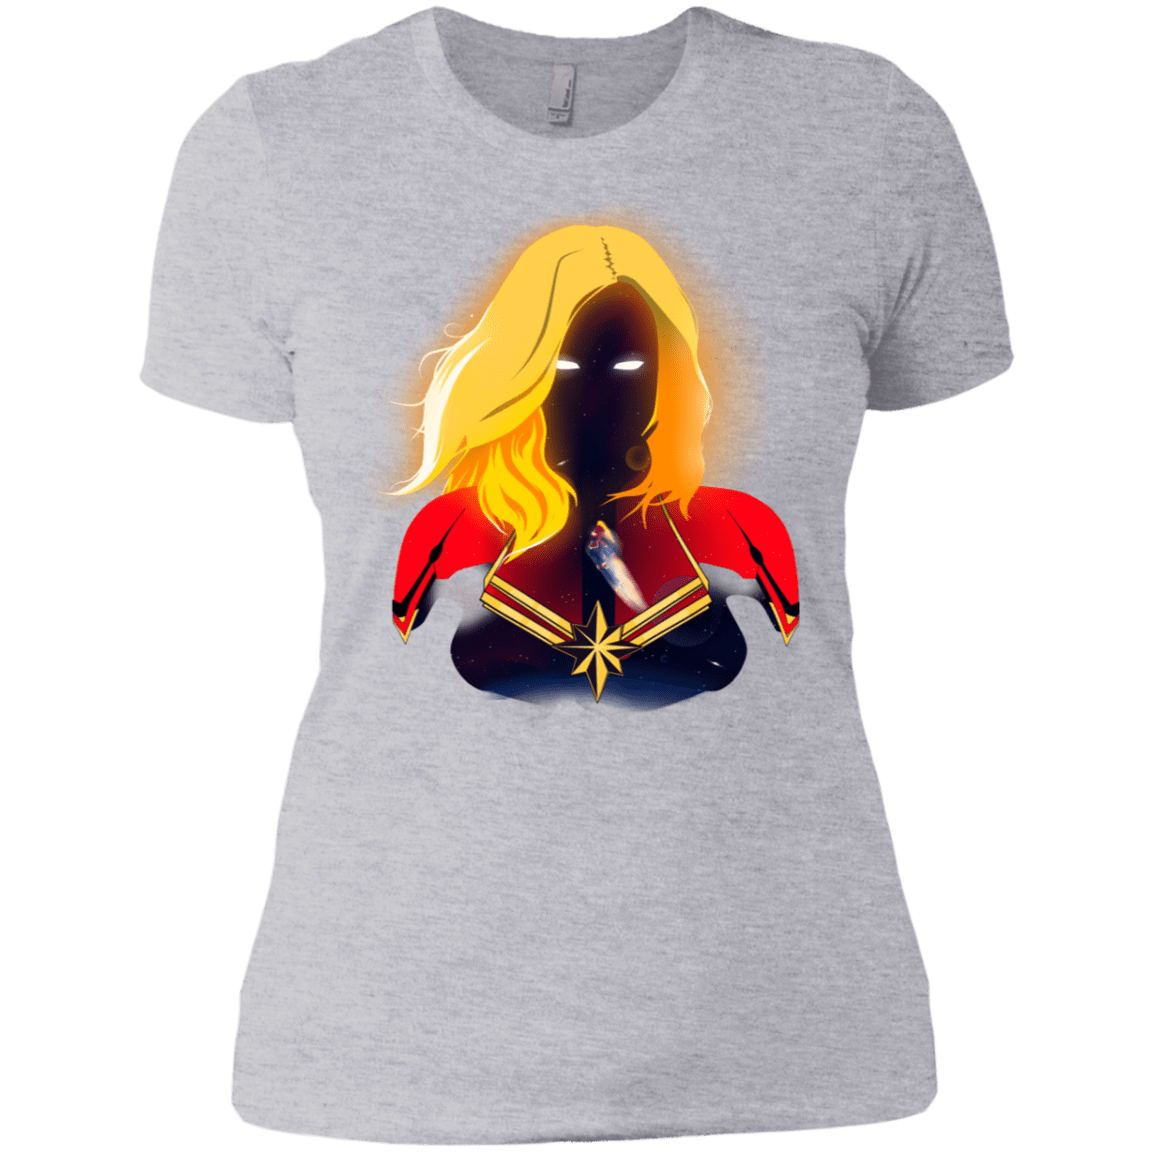 T-Shirts Heather Grey / X-Small M A R V E L Women's Premium T-Shirt